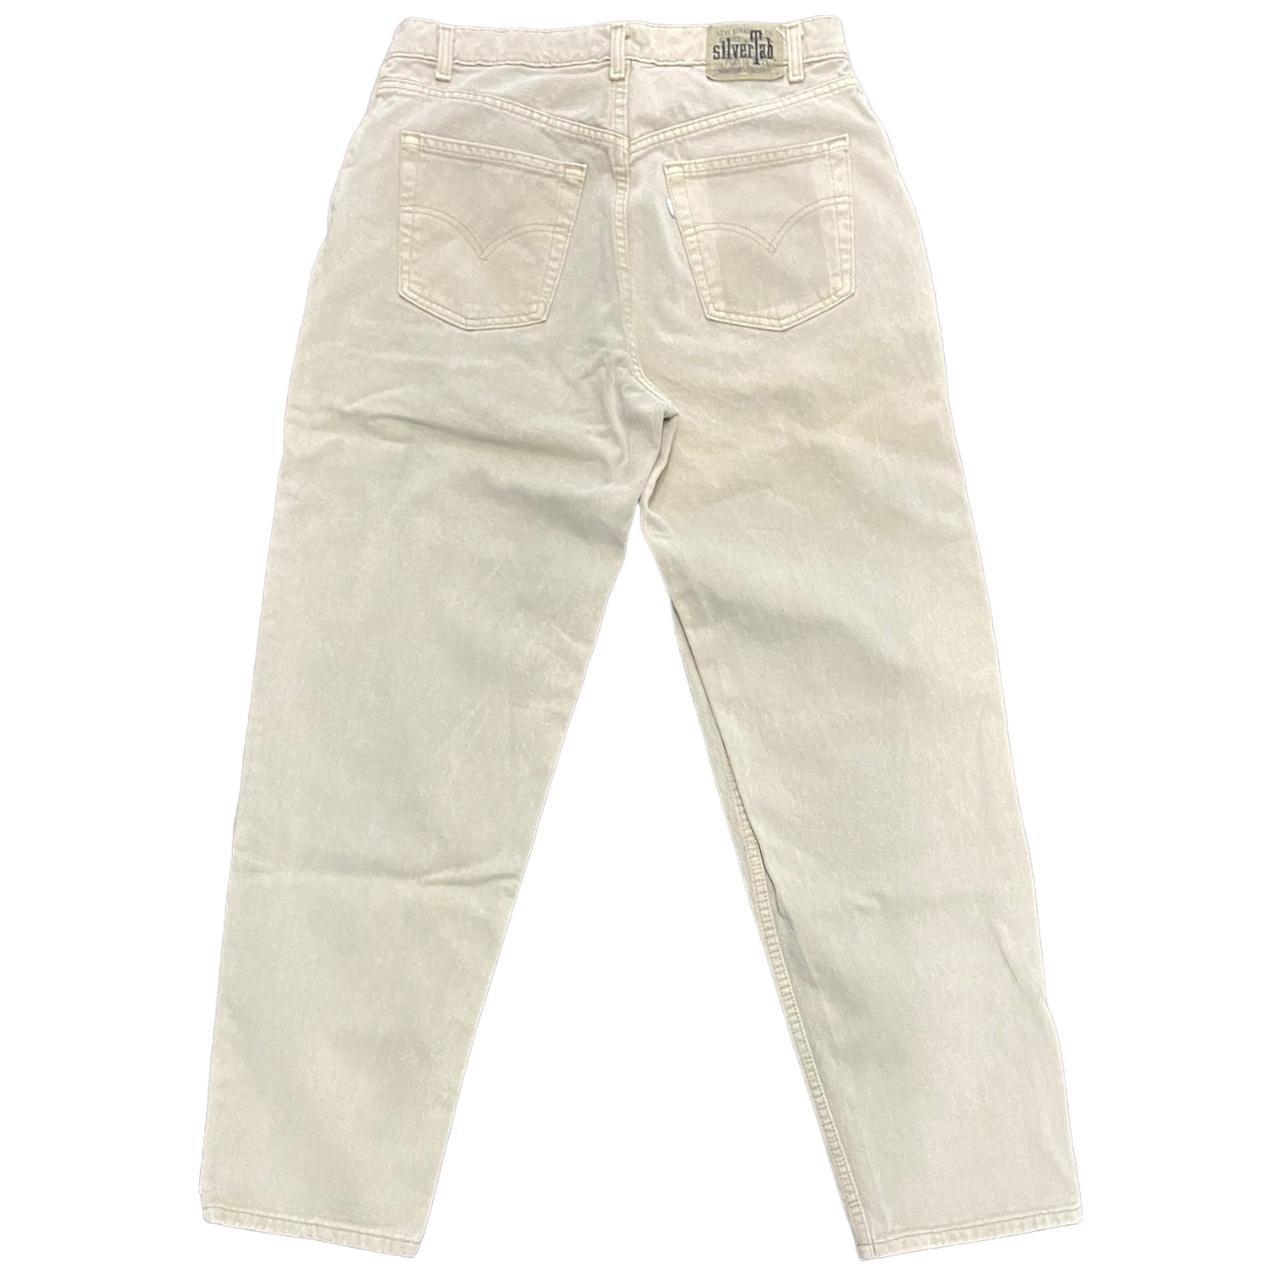 Levi's Men's Tan Jeans (2)